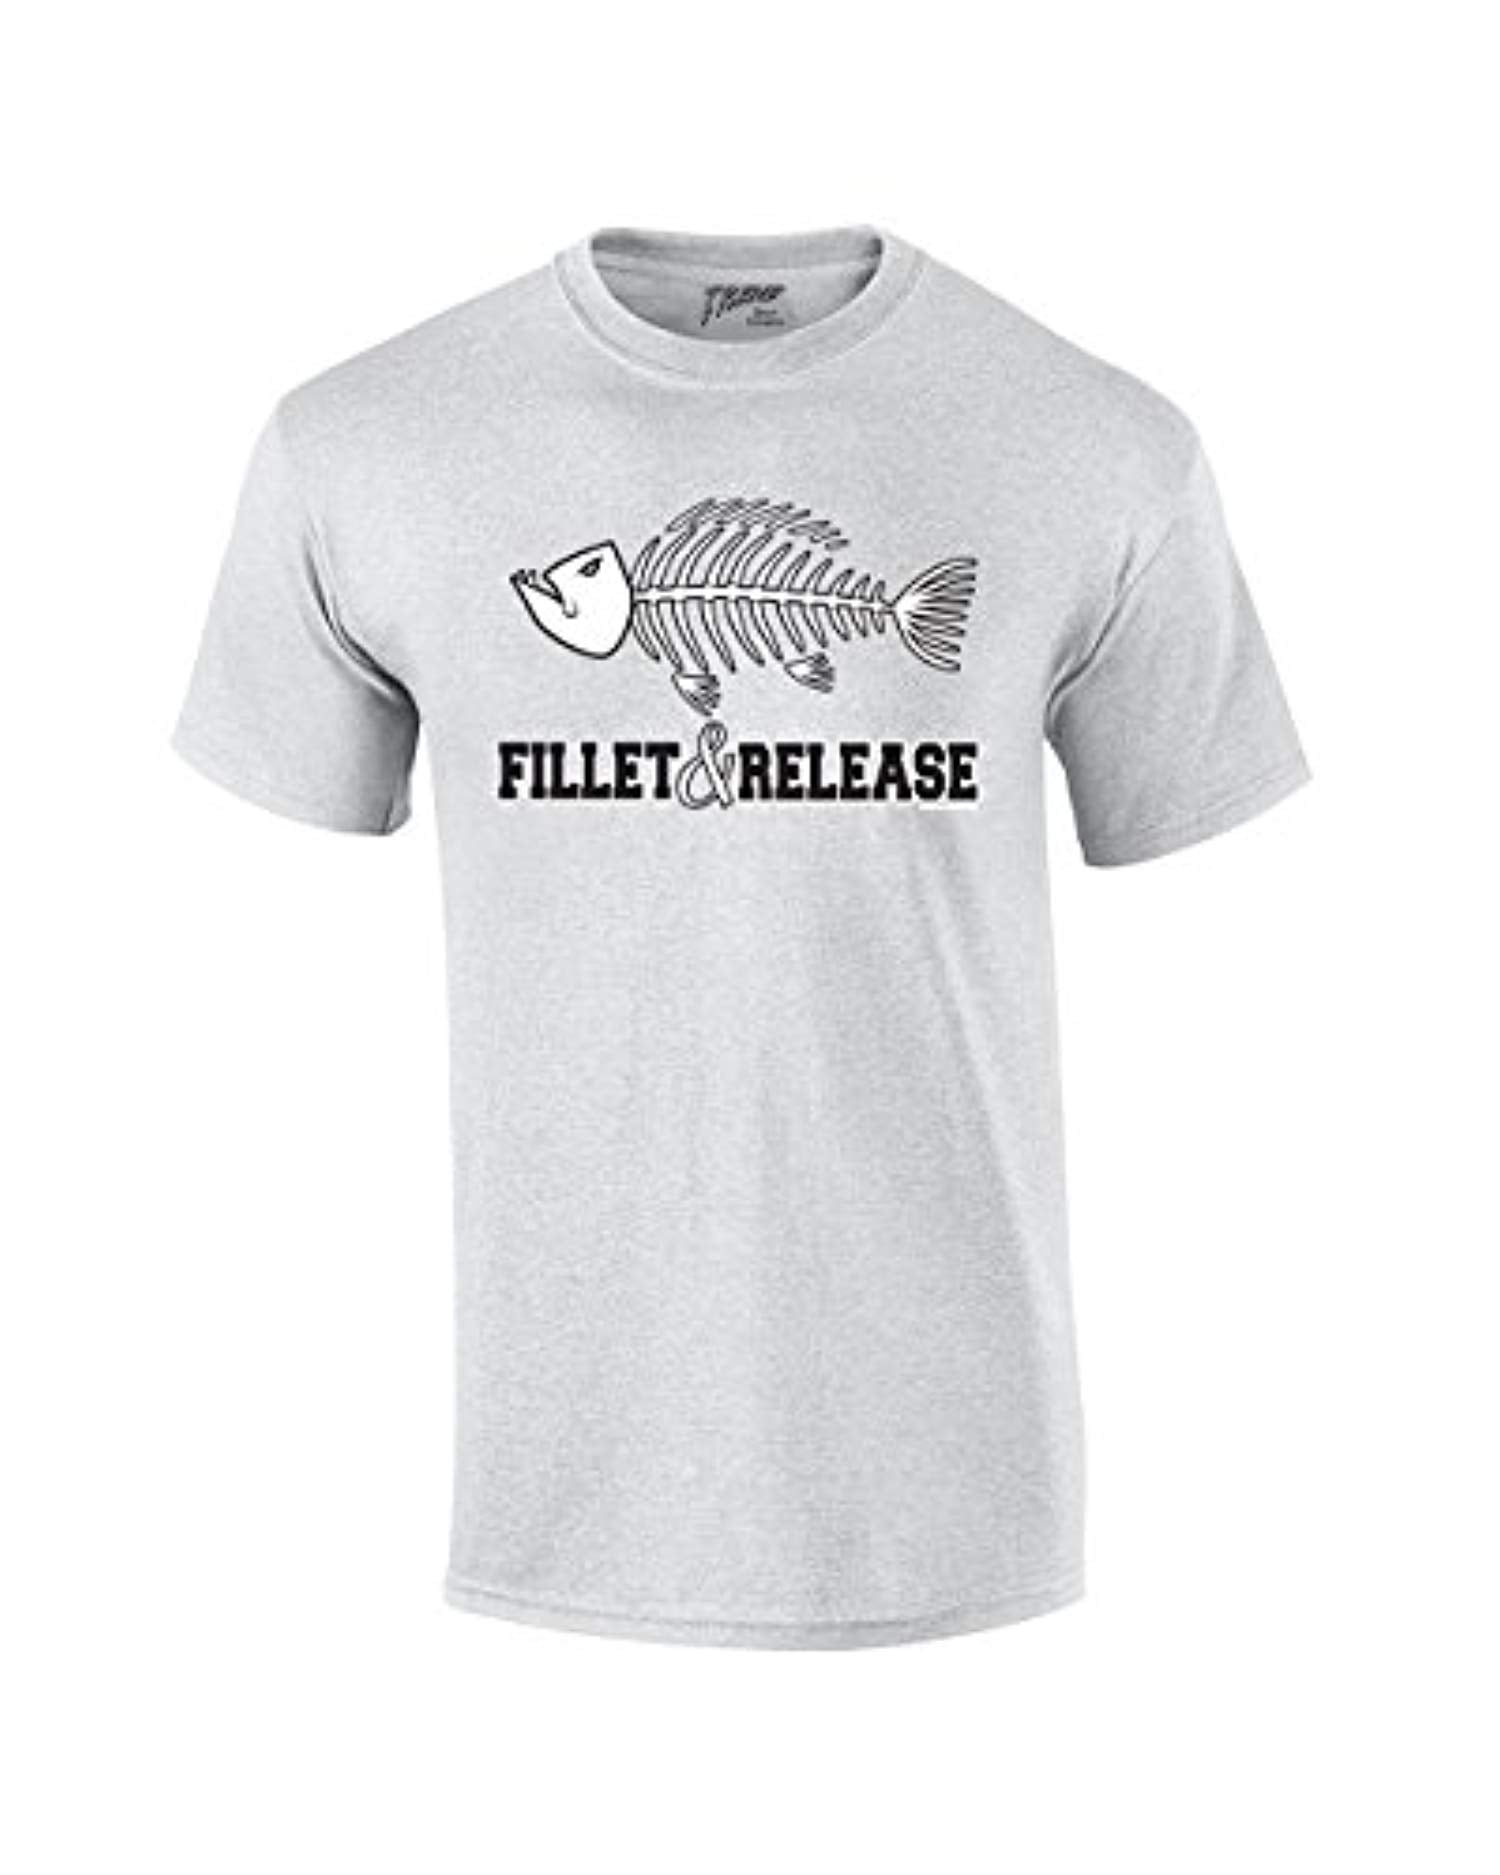 Trenz Shirt Company Fishing T-Shirt Fillet and Release Fish Bones Tee Funny Humorous Fisherman Fish Tee Bass Trout Salmon Walleye Crappie-White-Medium